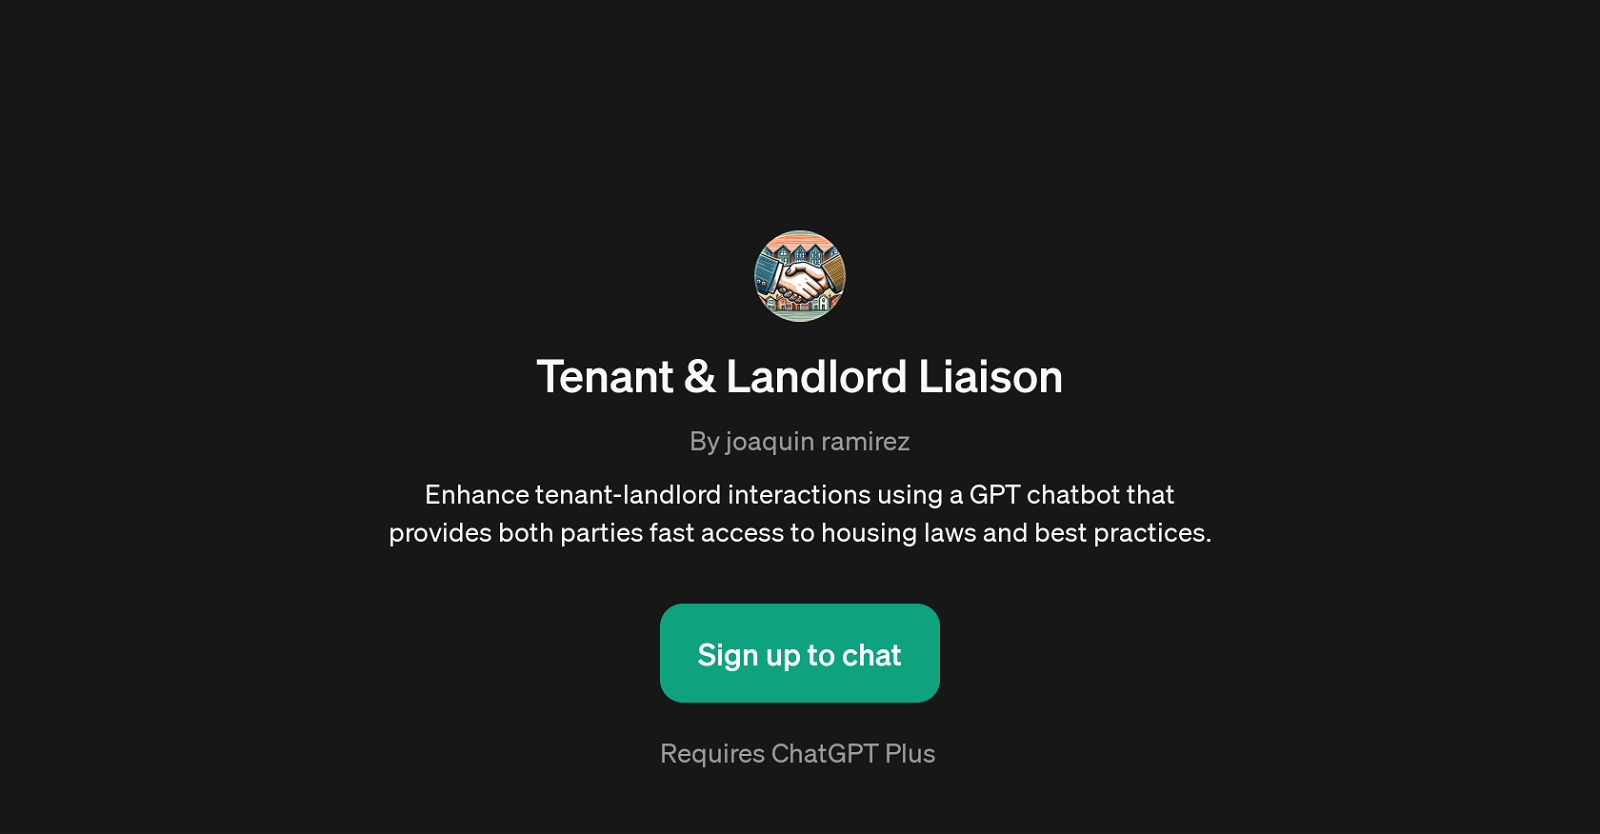 Tenant & Landlord Liaison website